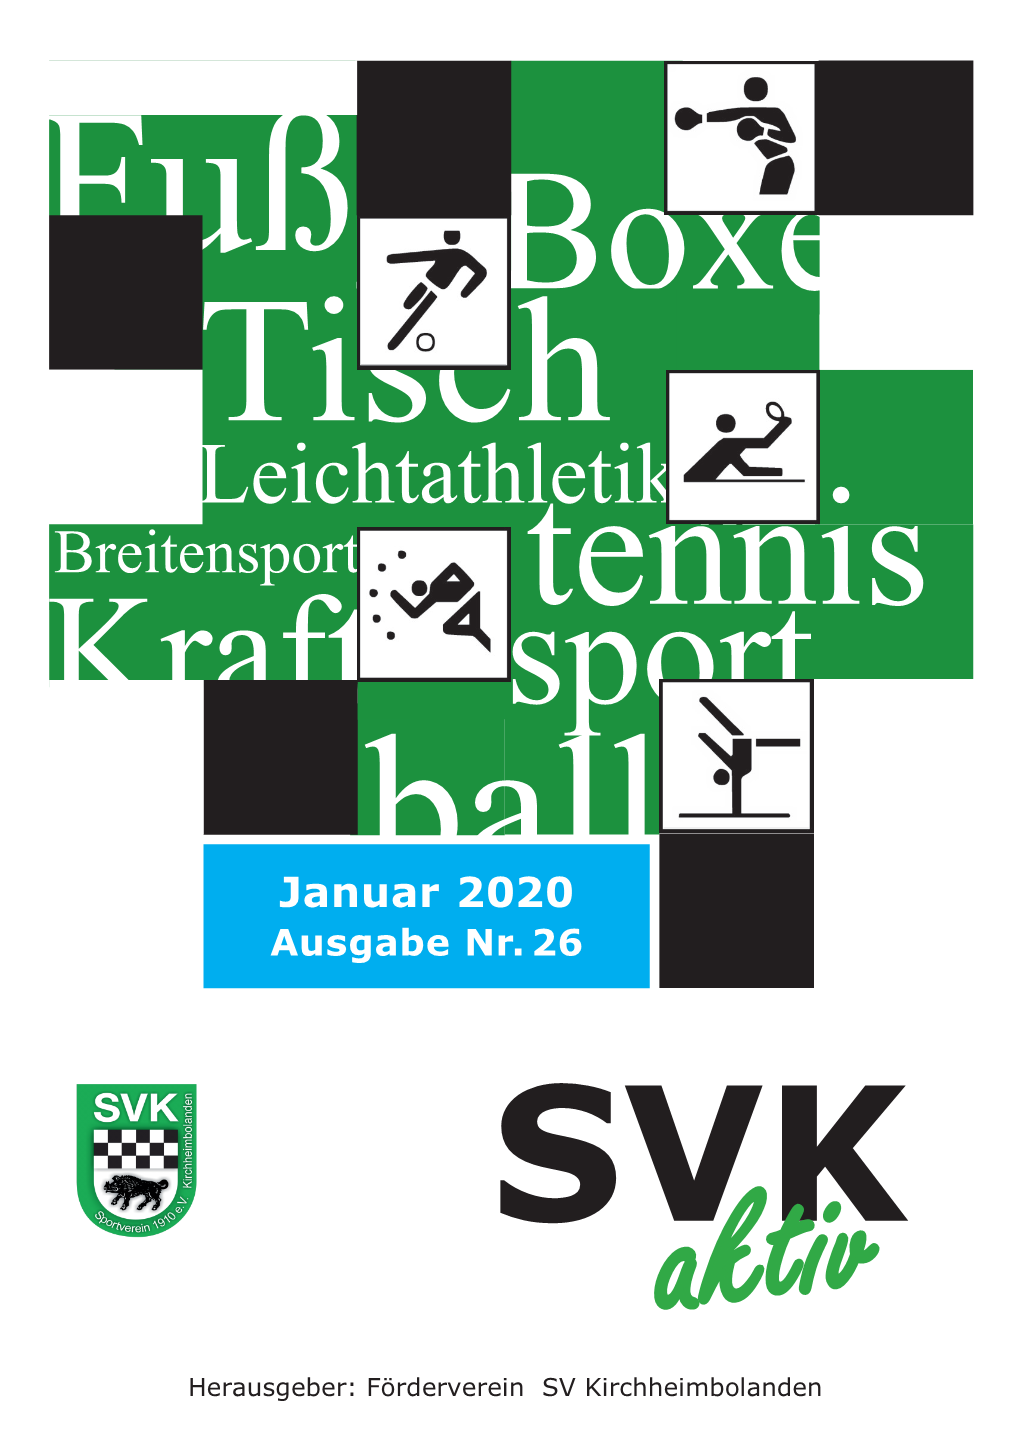 SVK Aktiv Herausgeber: Förderverein SV Kirchheimbolanden 3